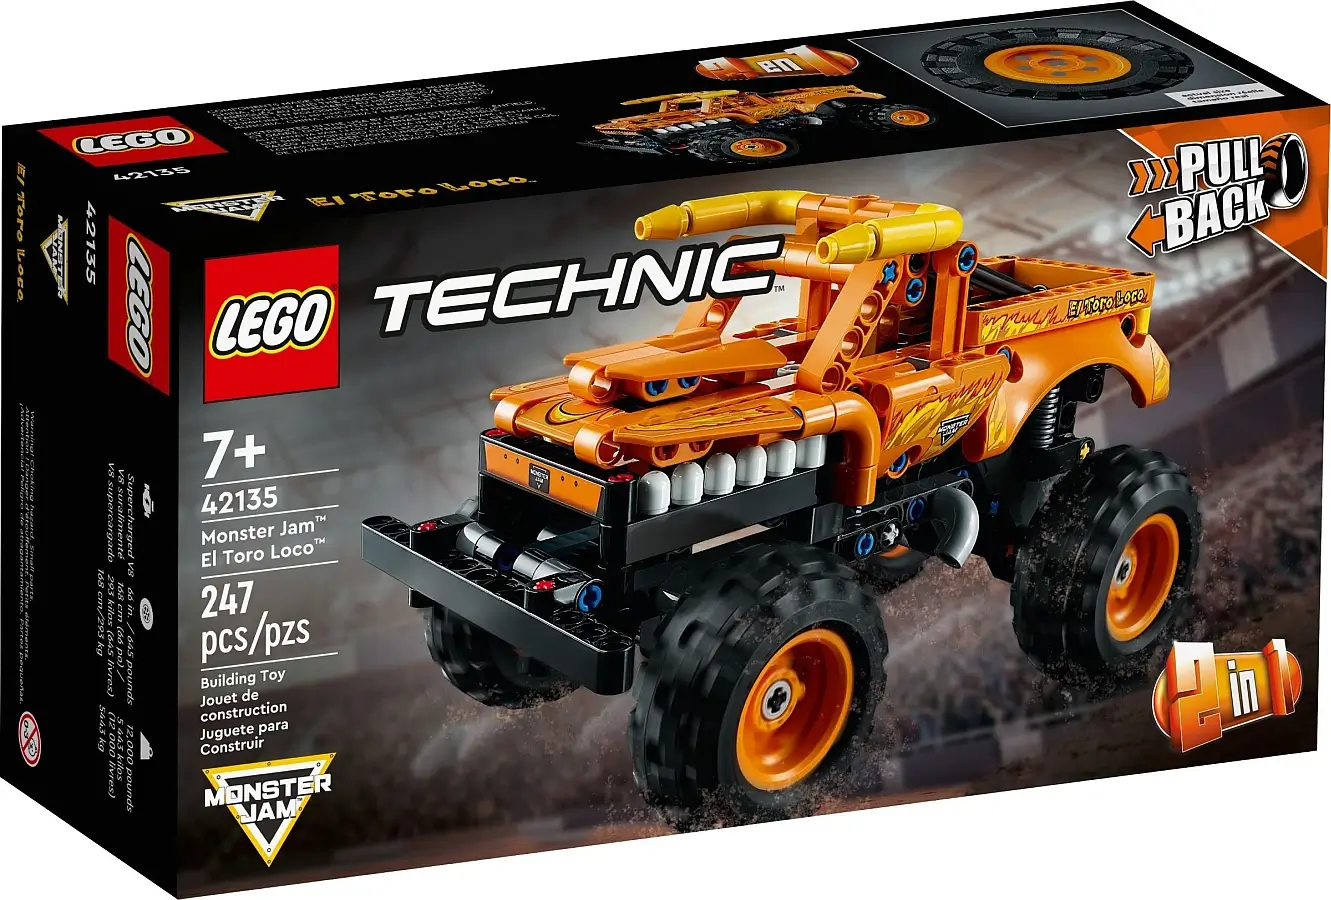 Pudełko zestawu 42135 z serii LEGO® Technic™ – Monster Jam™ El Toro Loco™